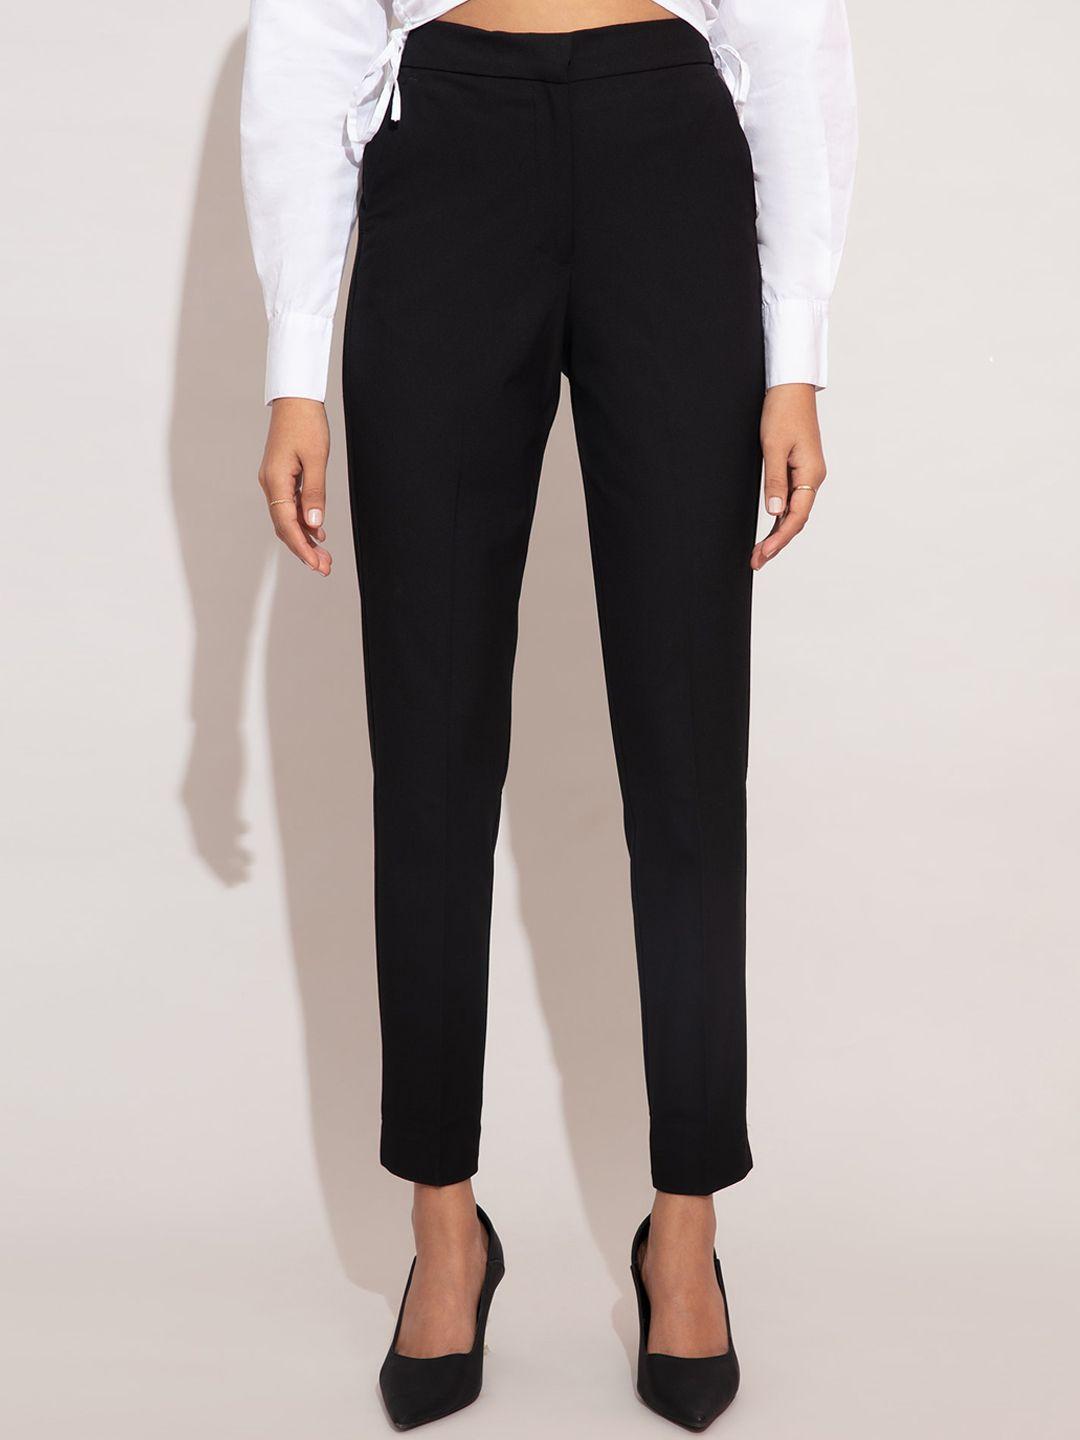 20dresses women black slim fit trousers